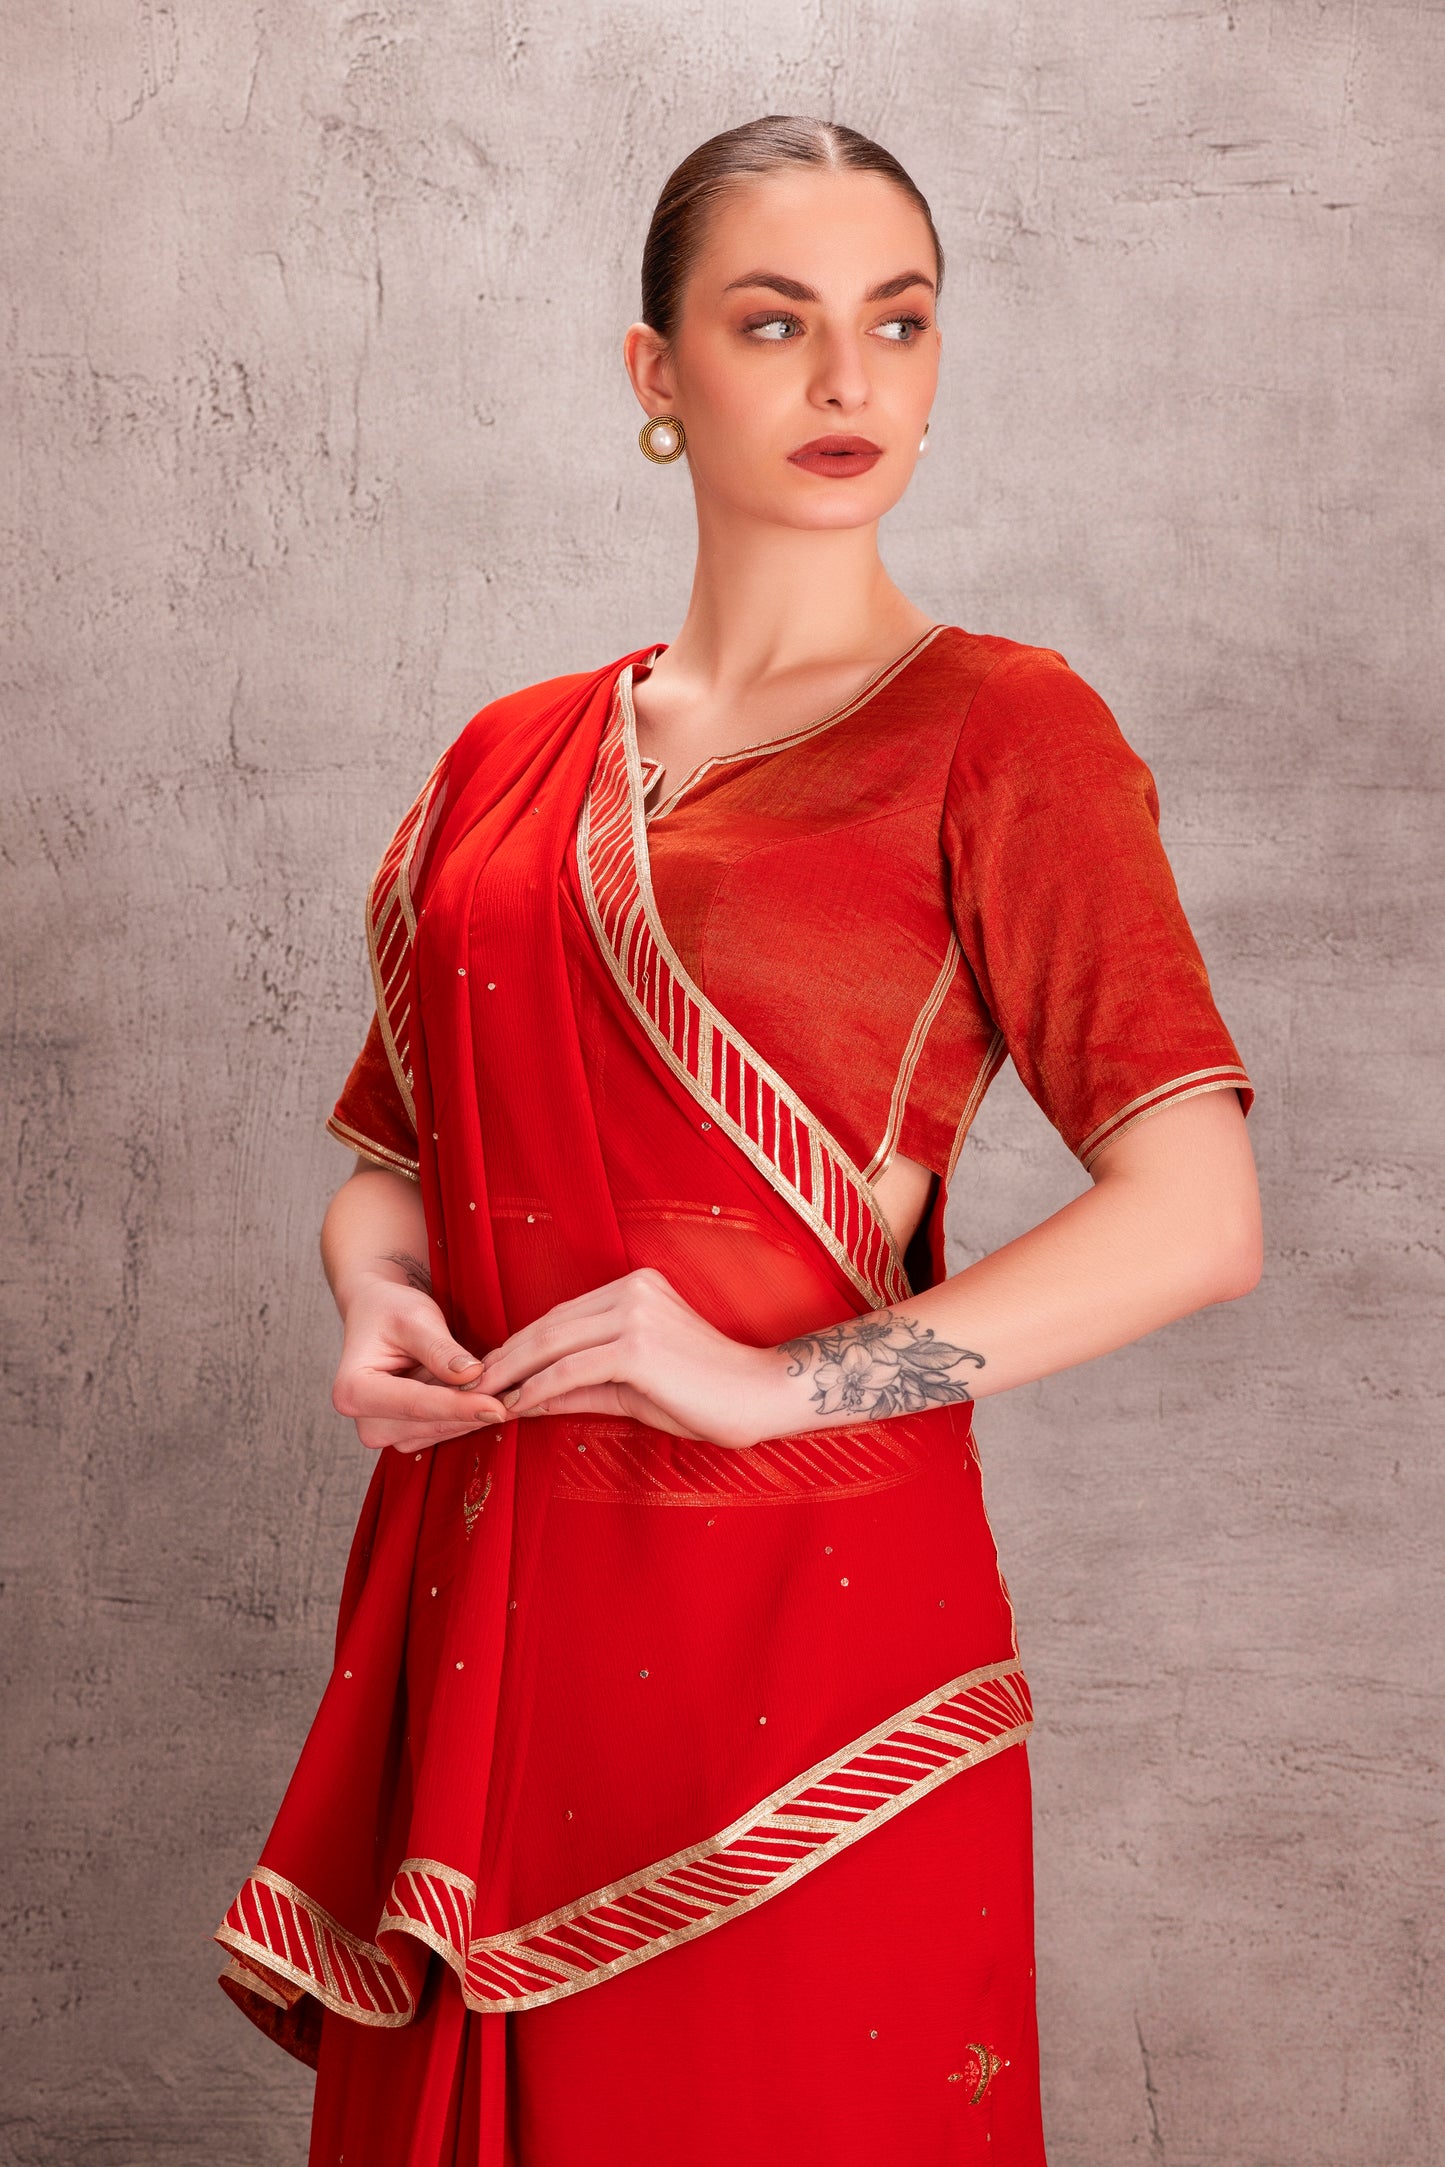 Orange Chiffon Saree Comes With Embroidered Stitched Blouse & Organic Cotton Petticoat (3 Pcs)